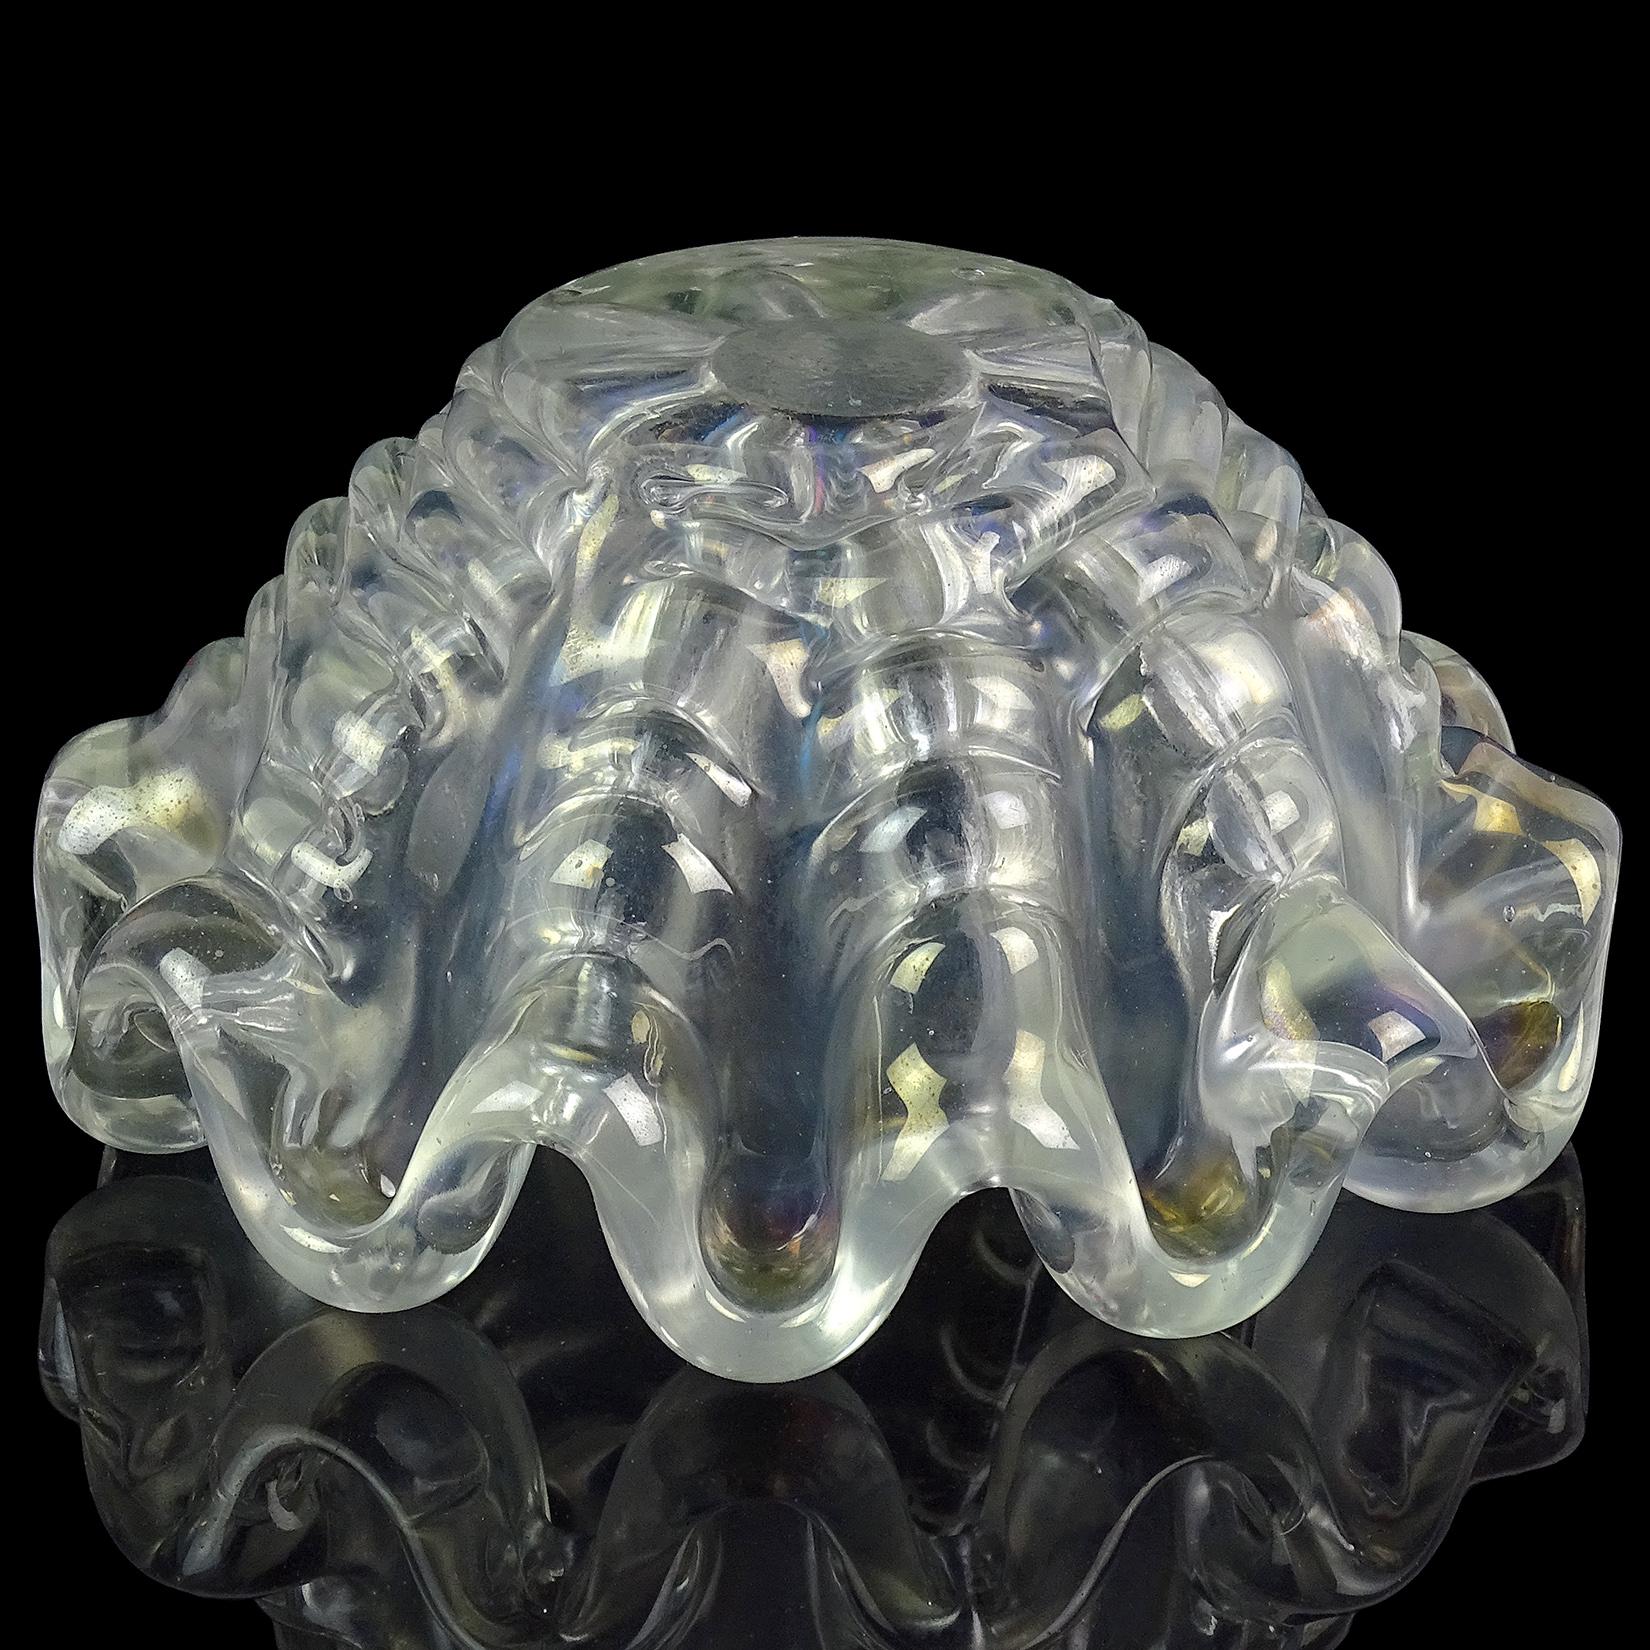 20th Century Barovier Toso Murano Iridescent Italian Art Glass Sculptural Conch Seashell Bowl For Sale